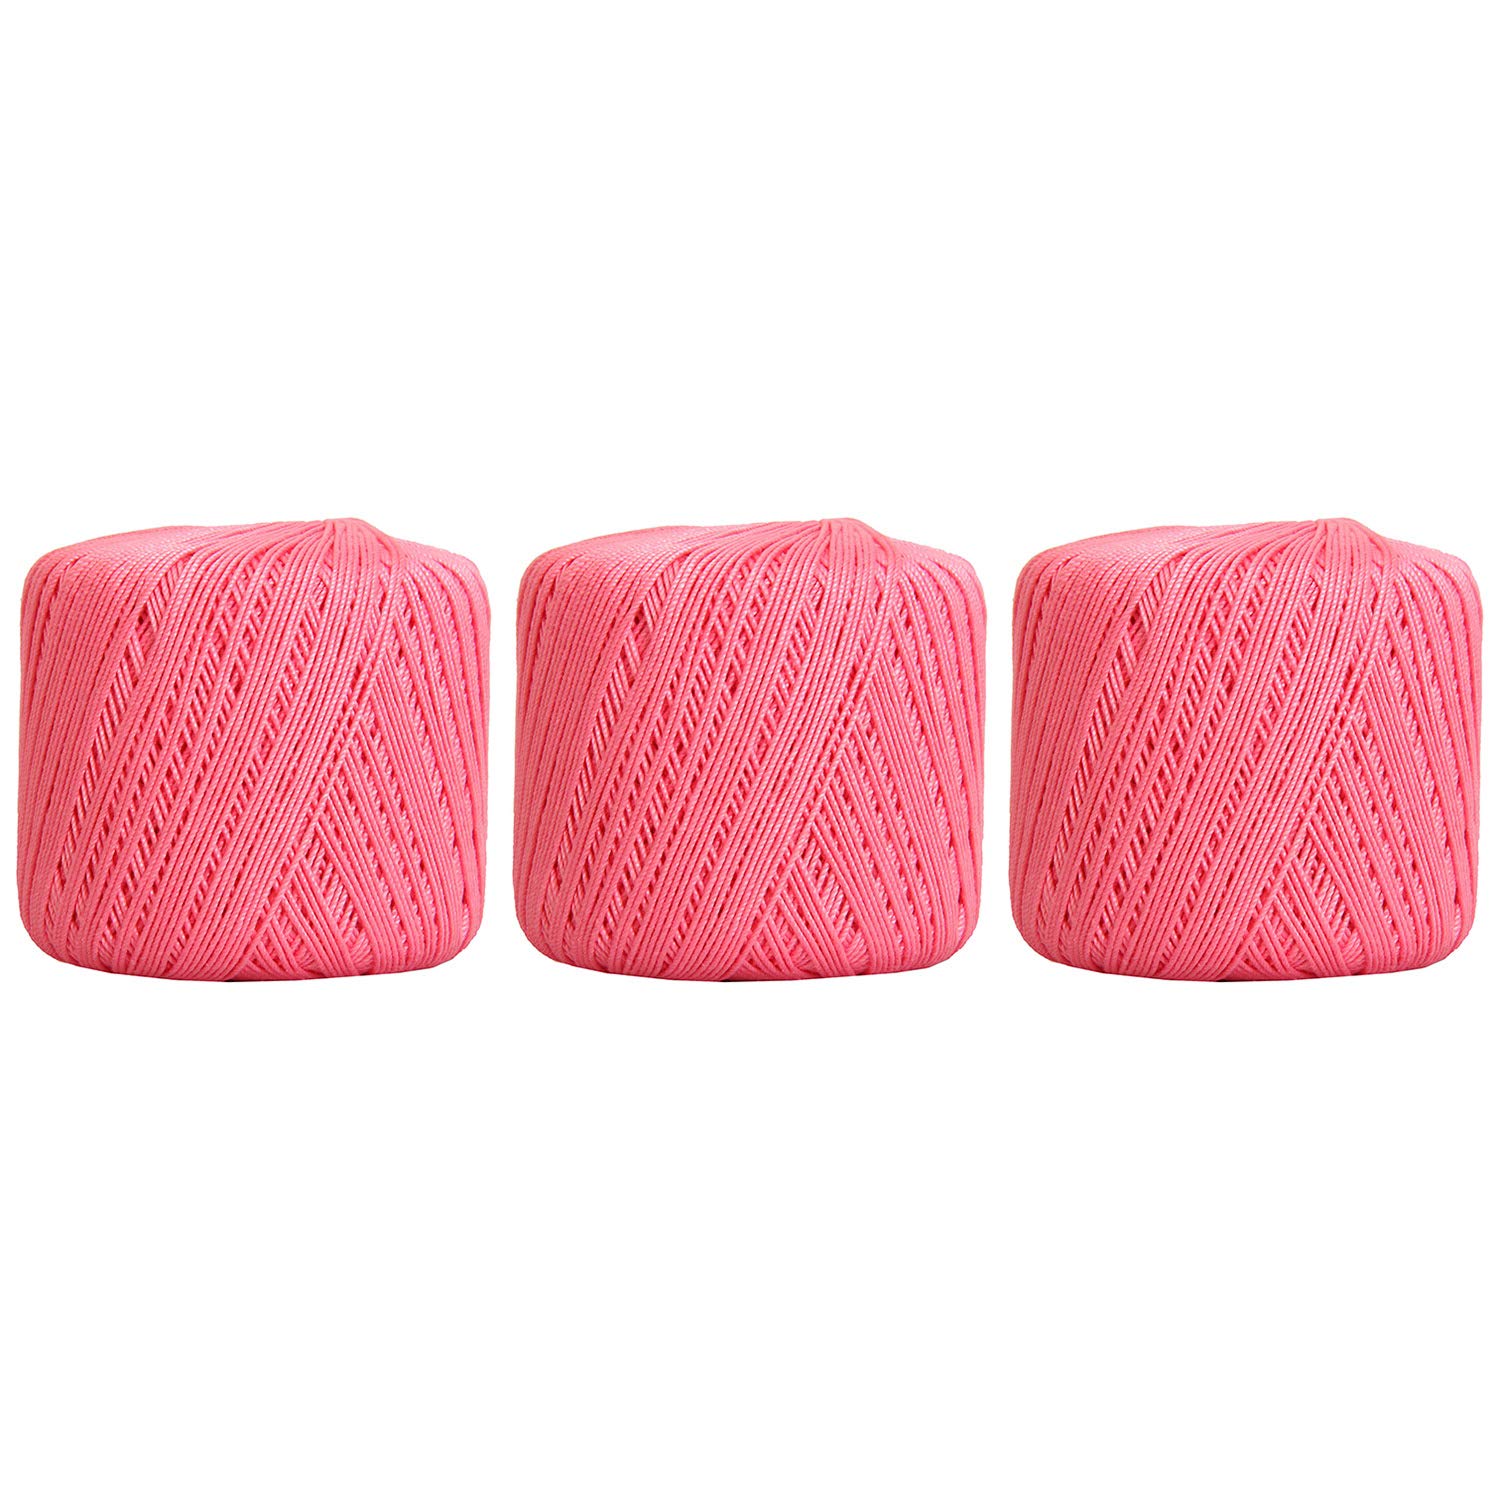 Threadart 3 Ball Pack Threadart 100 Pure Cotton Crochet Thread - Size 3 - Color 34 - Pink - Size 10 And 3 - Singles And Bulk Packs Availab